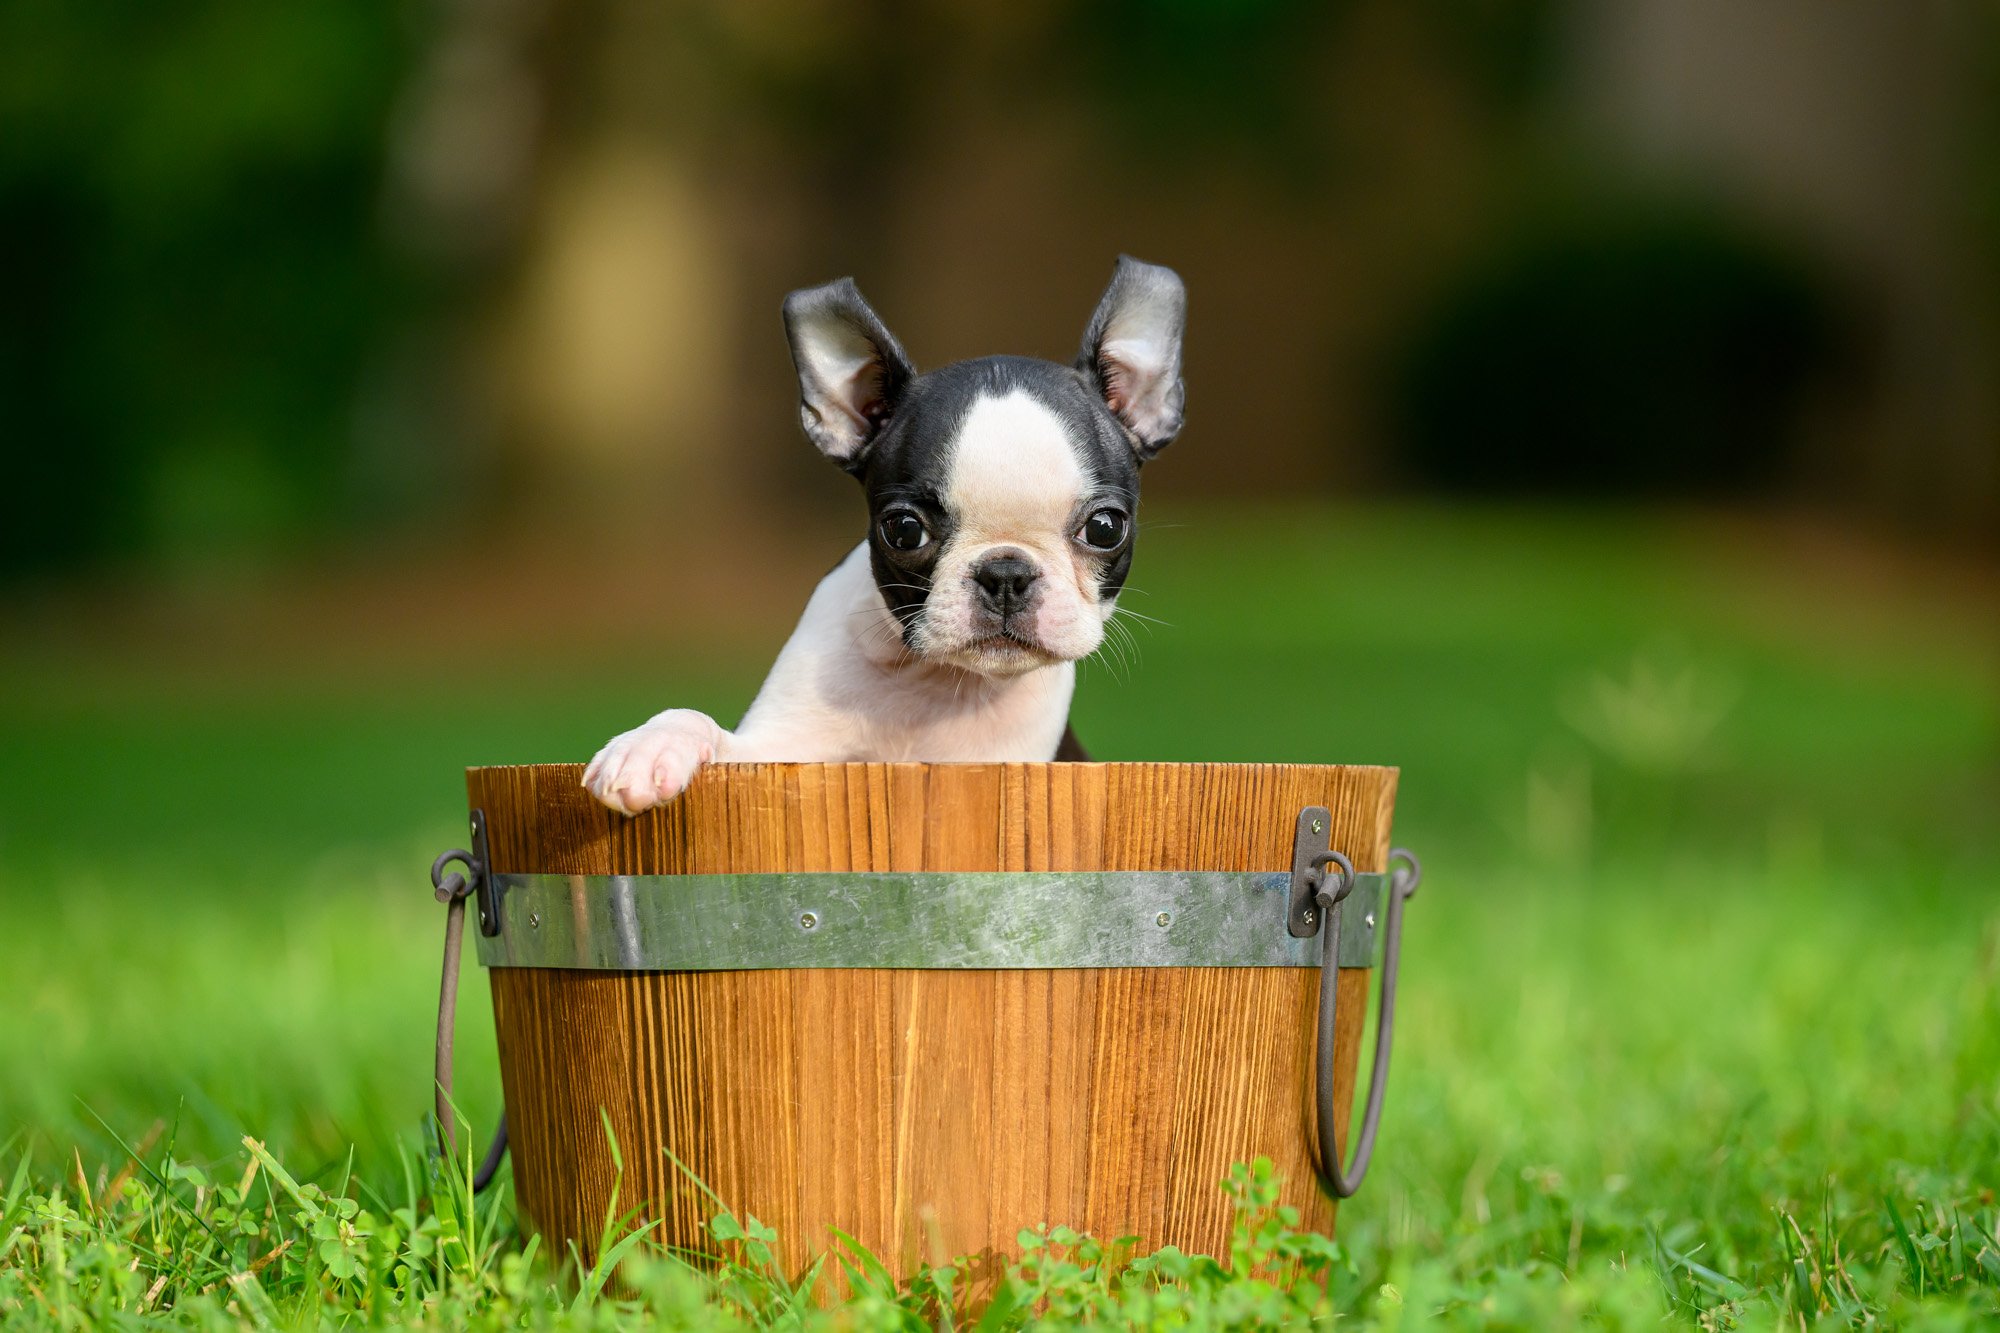 4lb Boston Terrier puppy in a pail